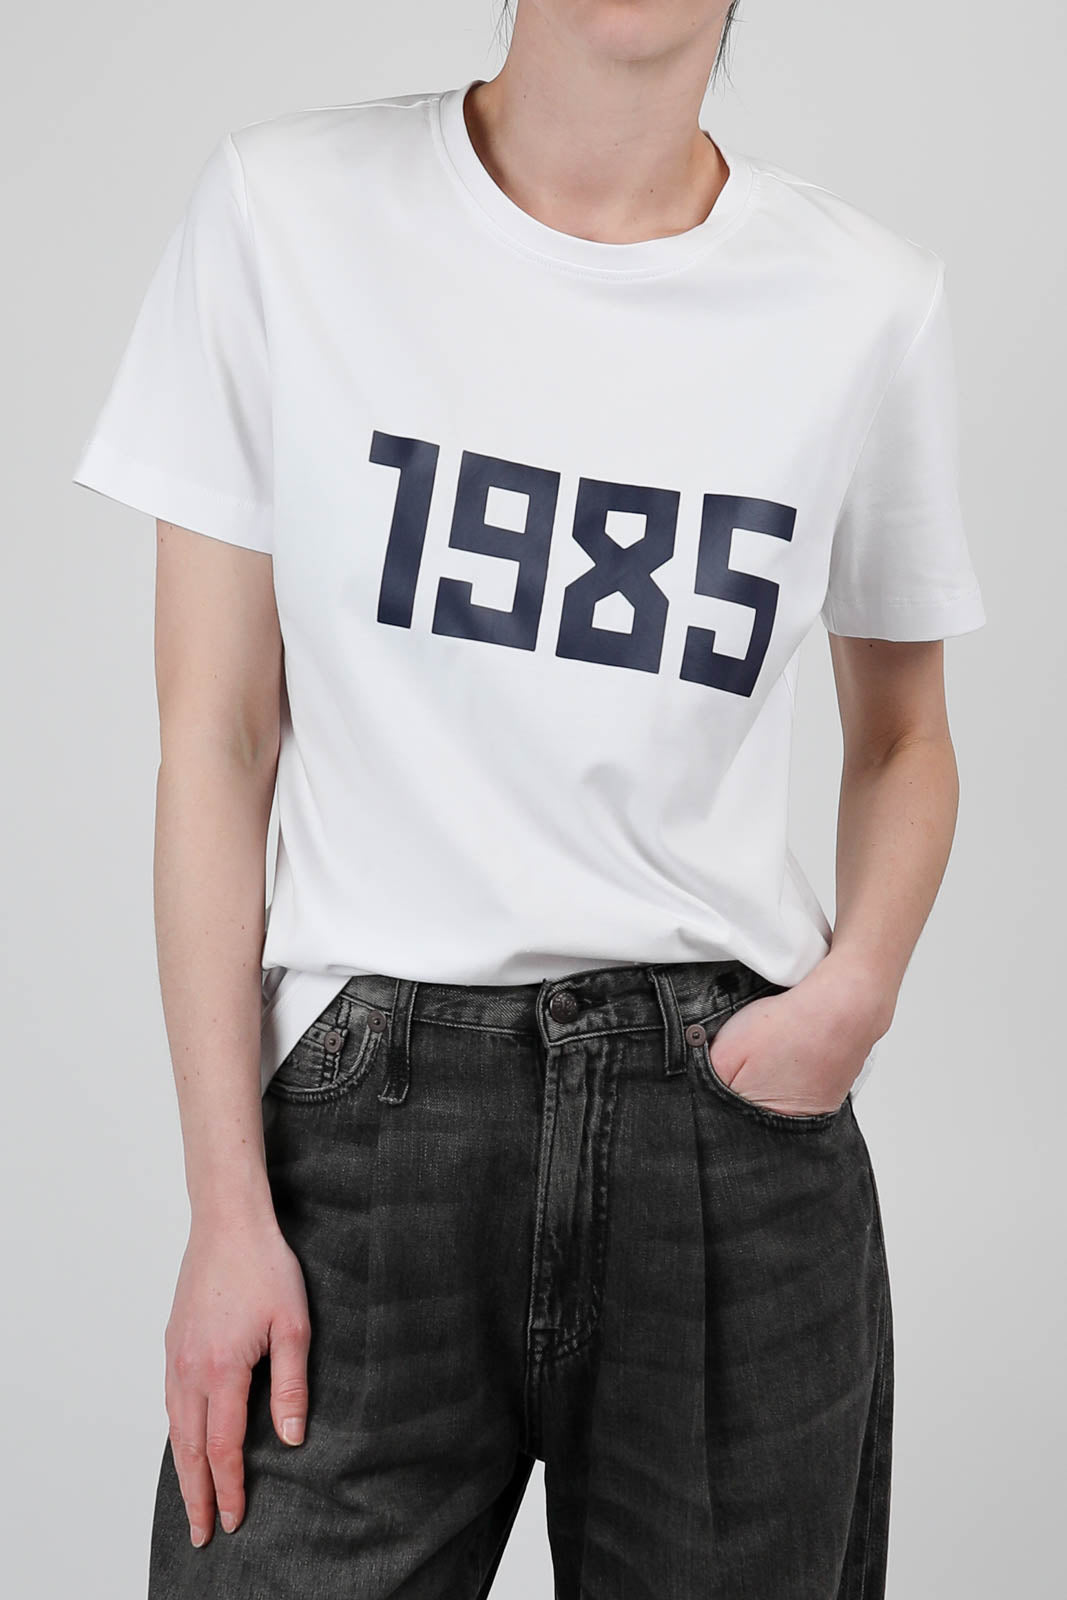 T-Shirt 1985 in Dunkelblau